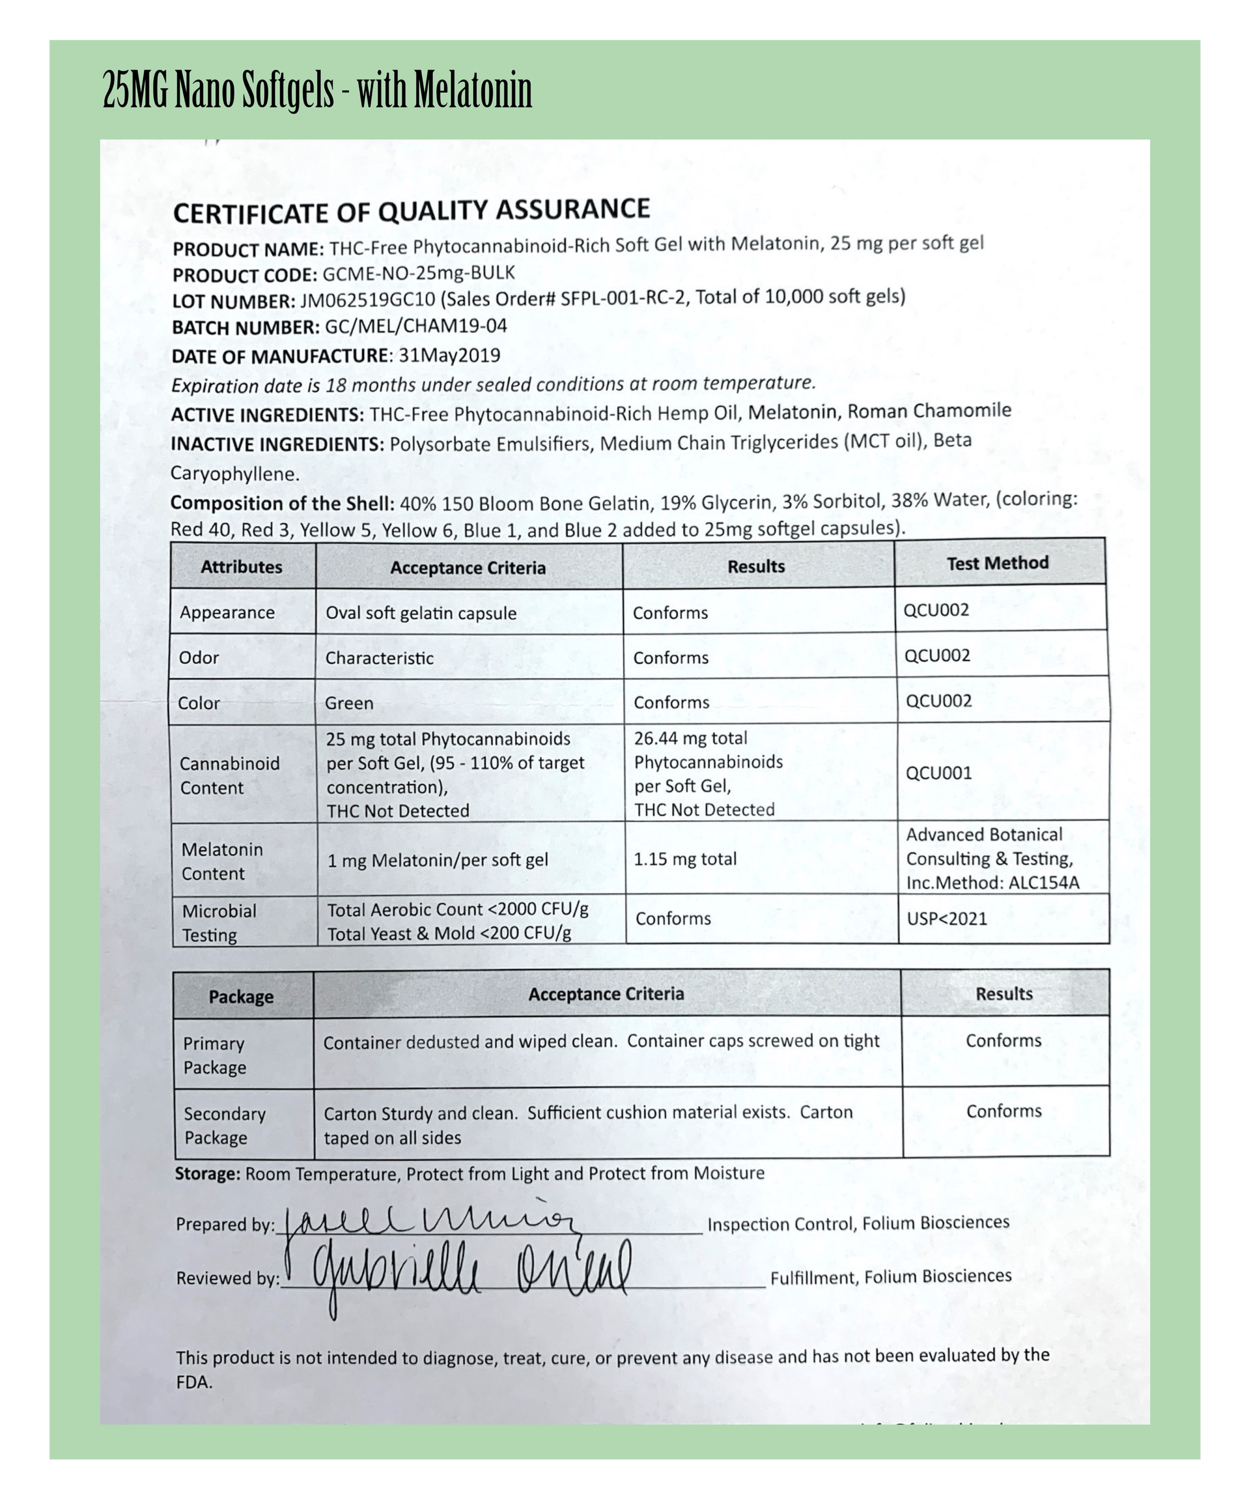 Texas Tonix - 25mg Nano CBD Soft Gels, 30 count Melatonin Certificate of Quality Assurance